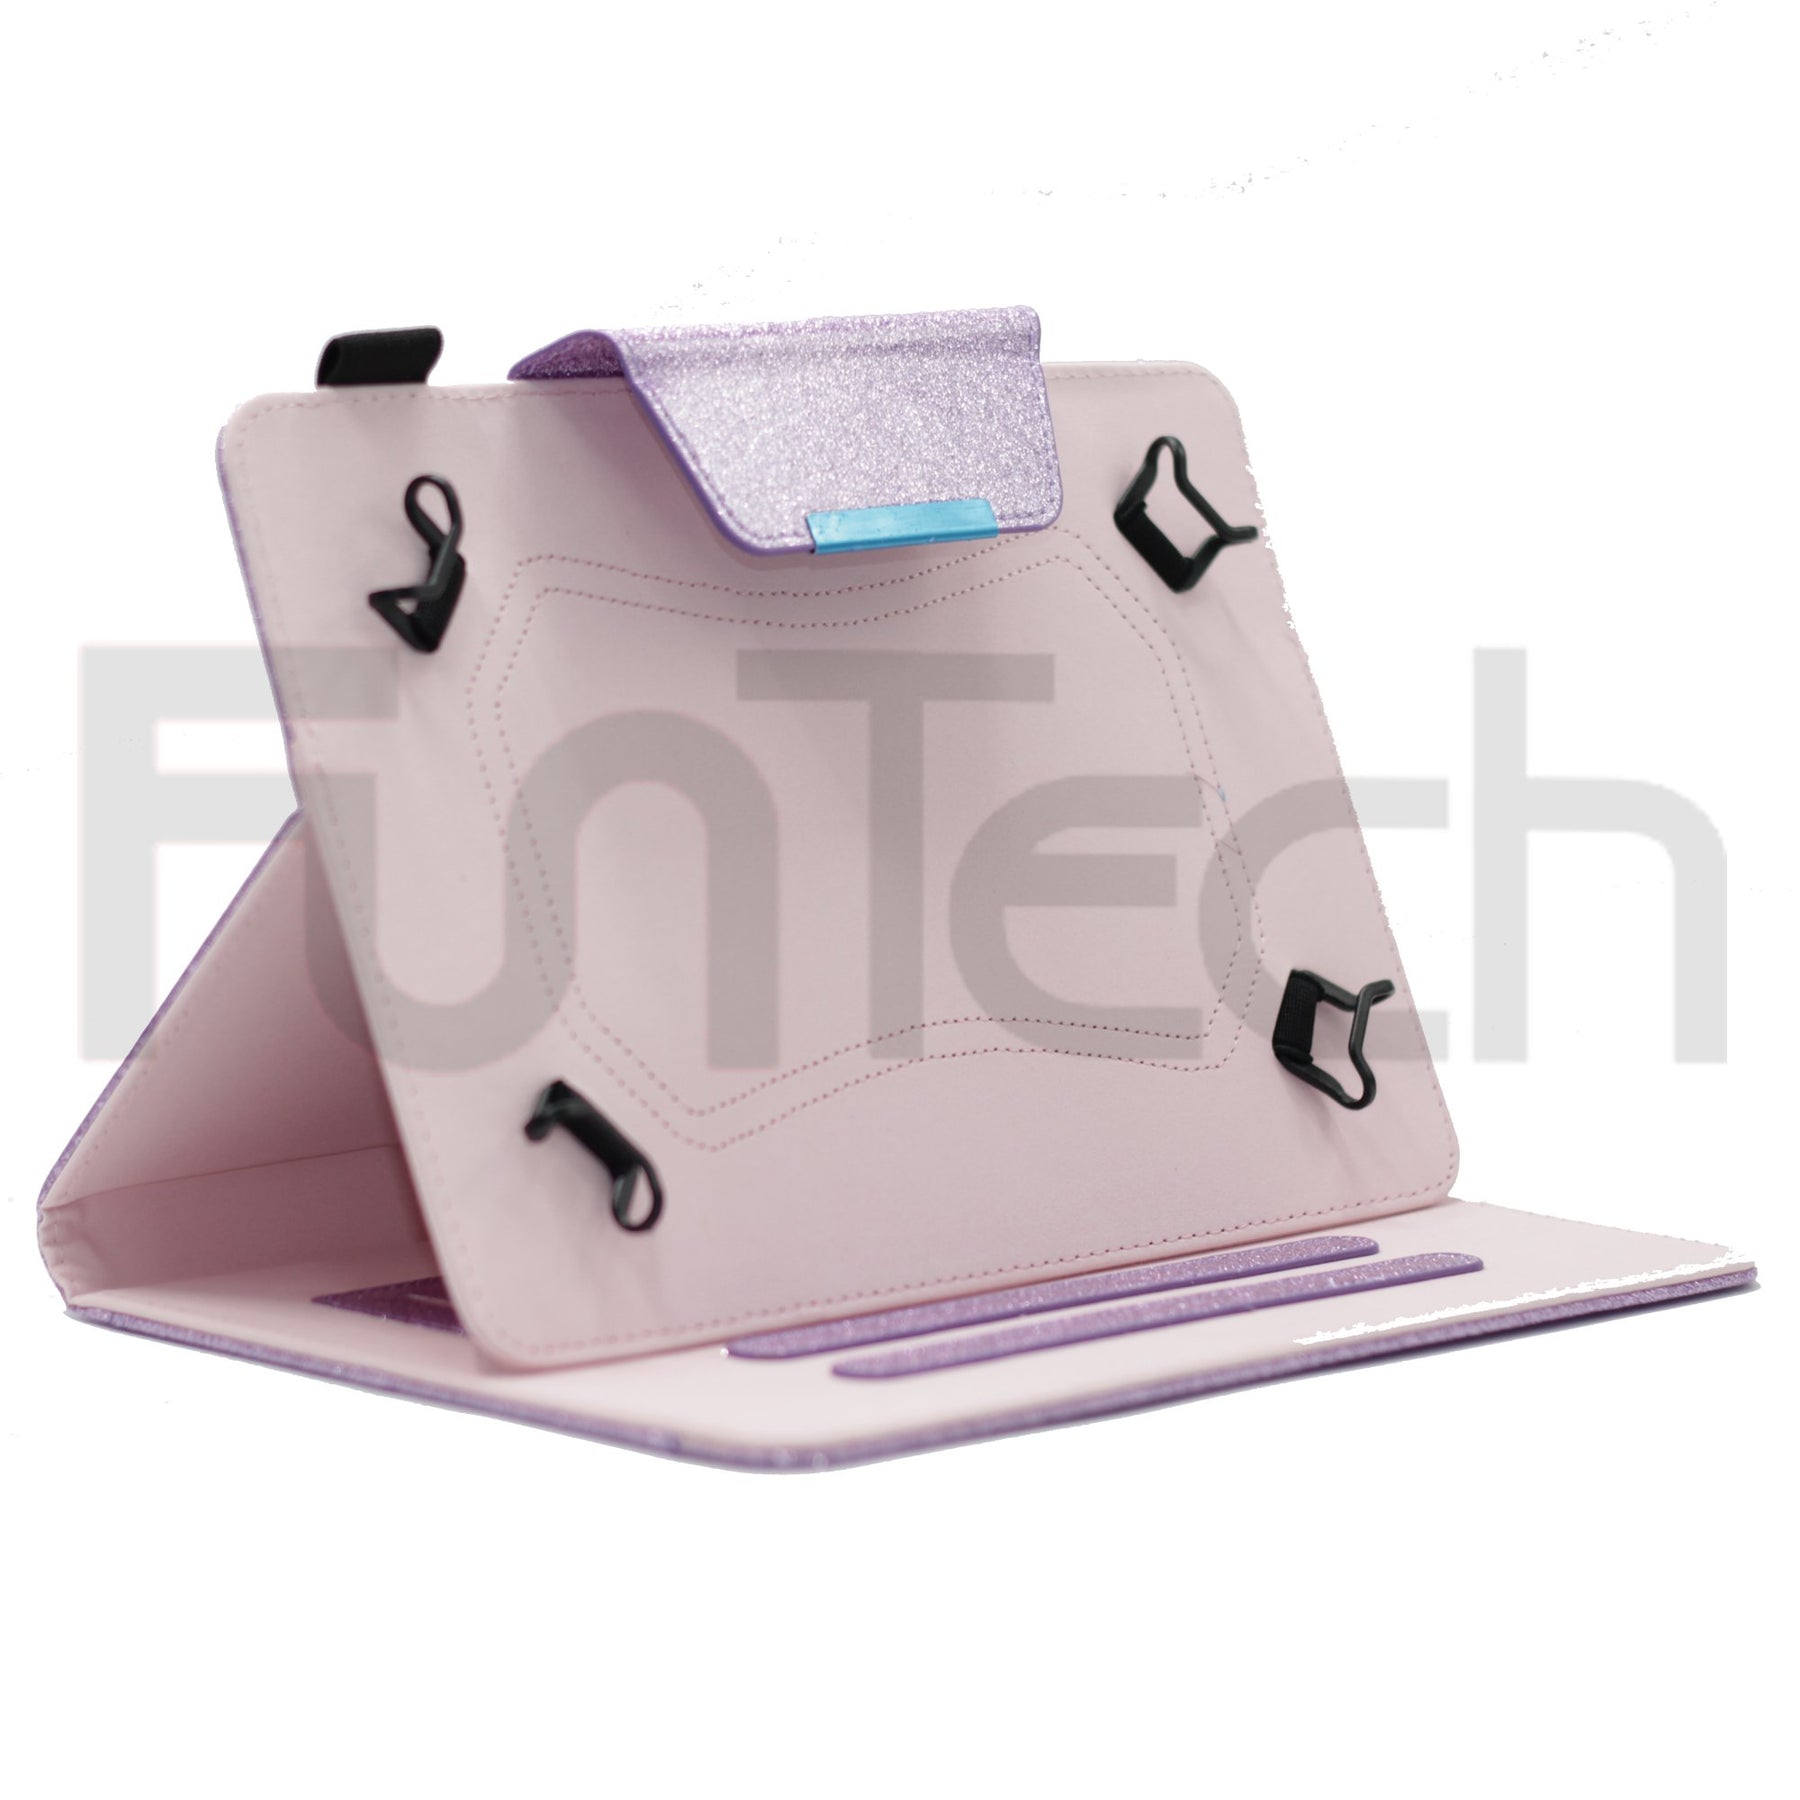 Universal Tablet Case 8 inch Color Purple